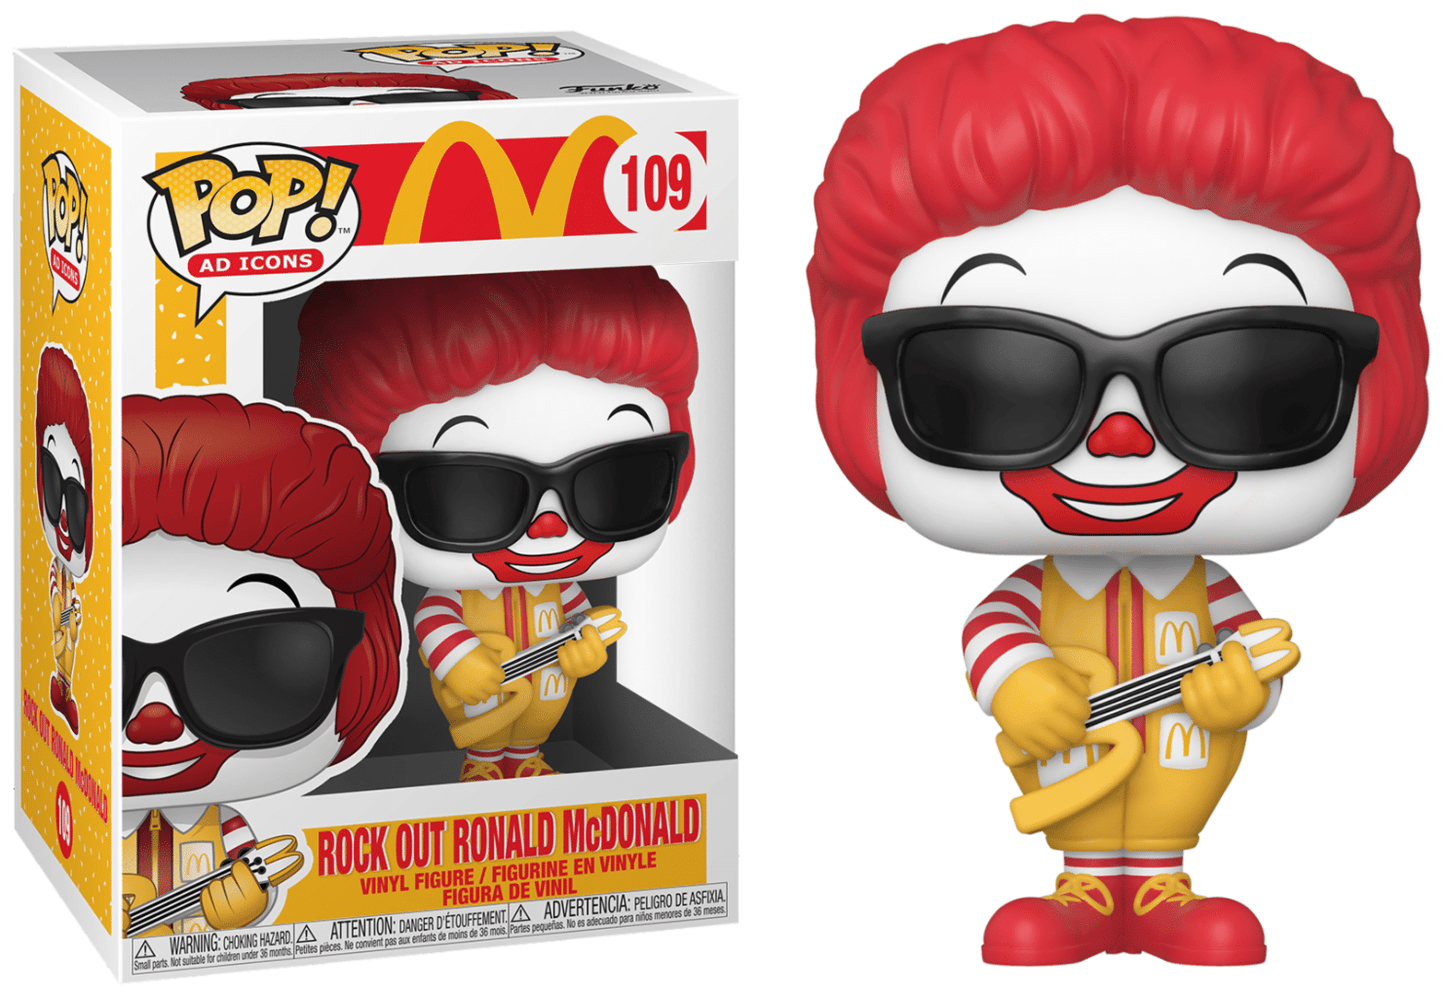 Pop! Ad Icons: McDonalds - Rock Out Ronald McDonald (109)